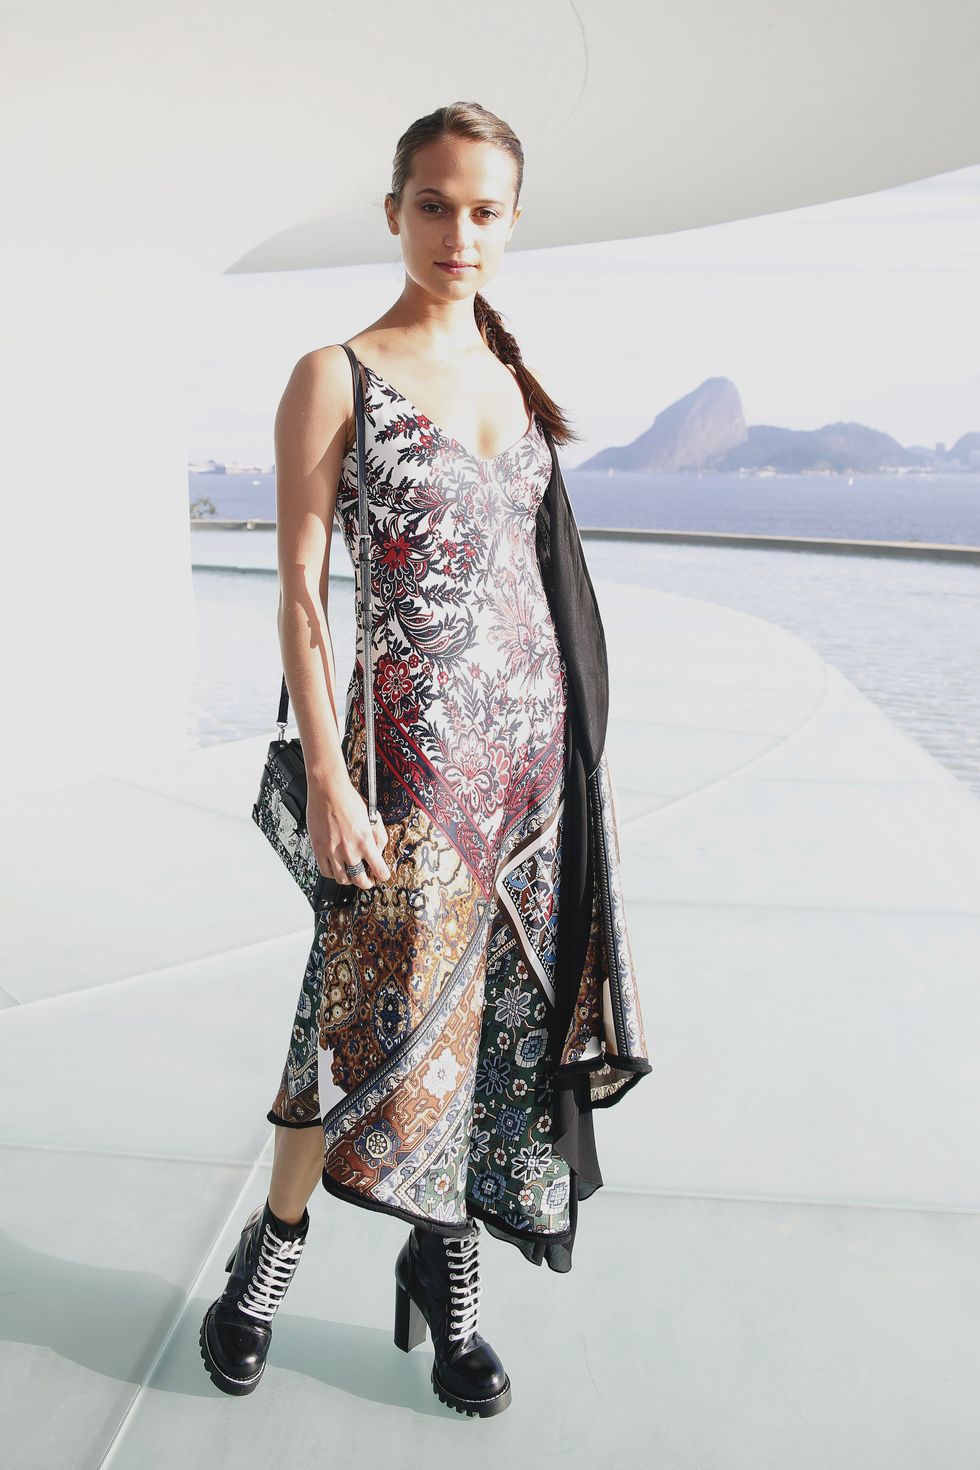 Alicia Vikander's Best Fashion Moments In Louis Vuitton